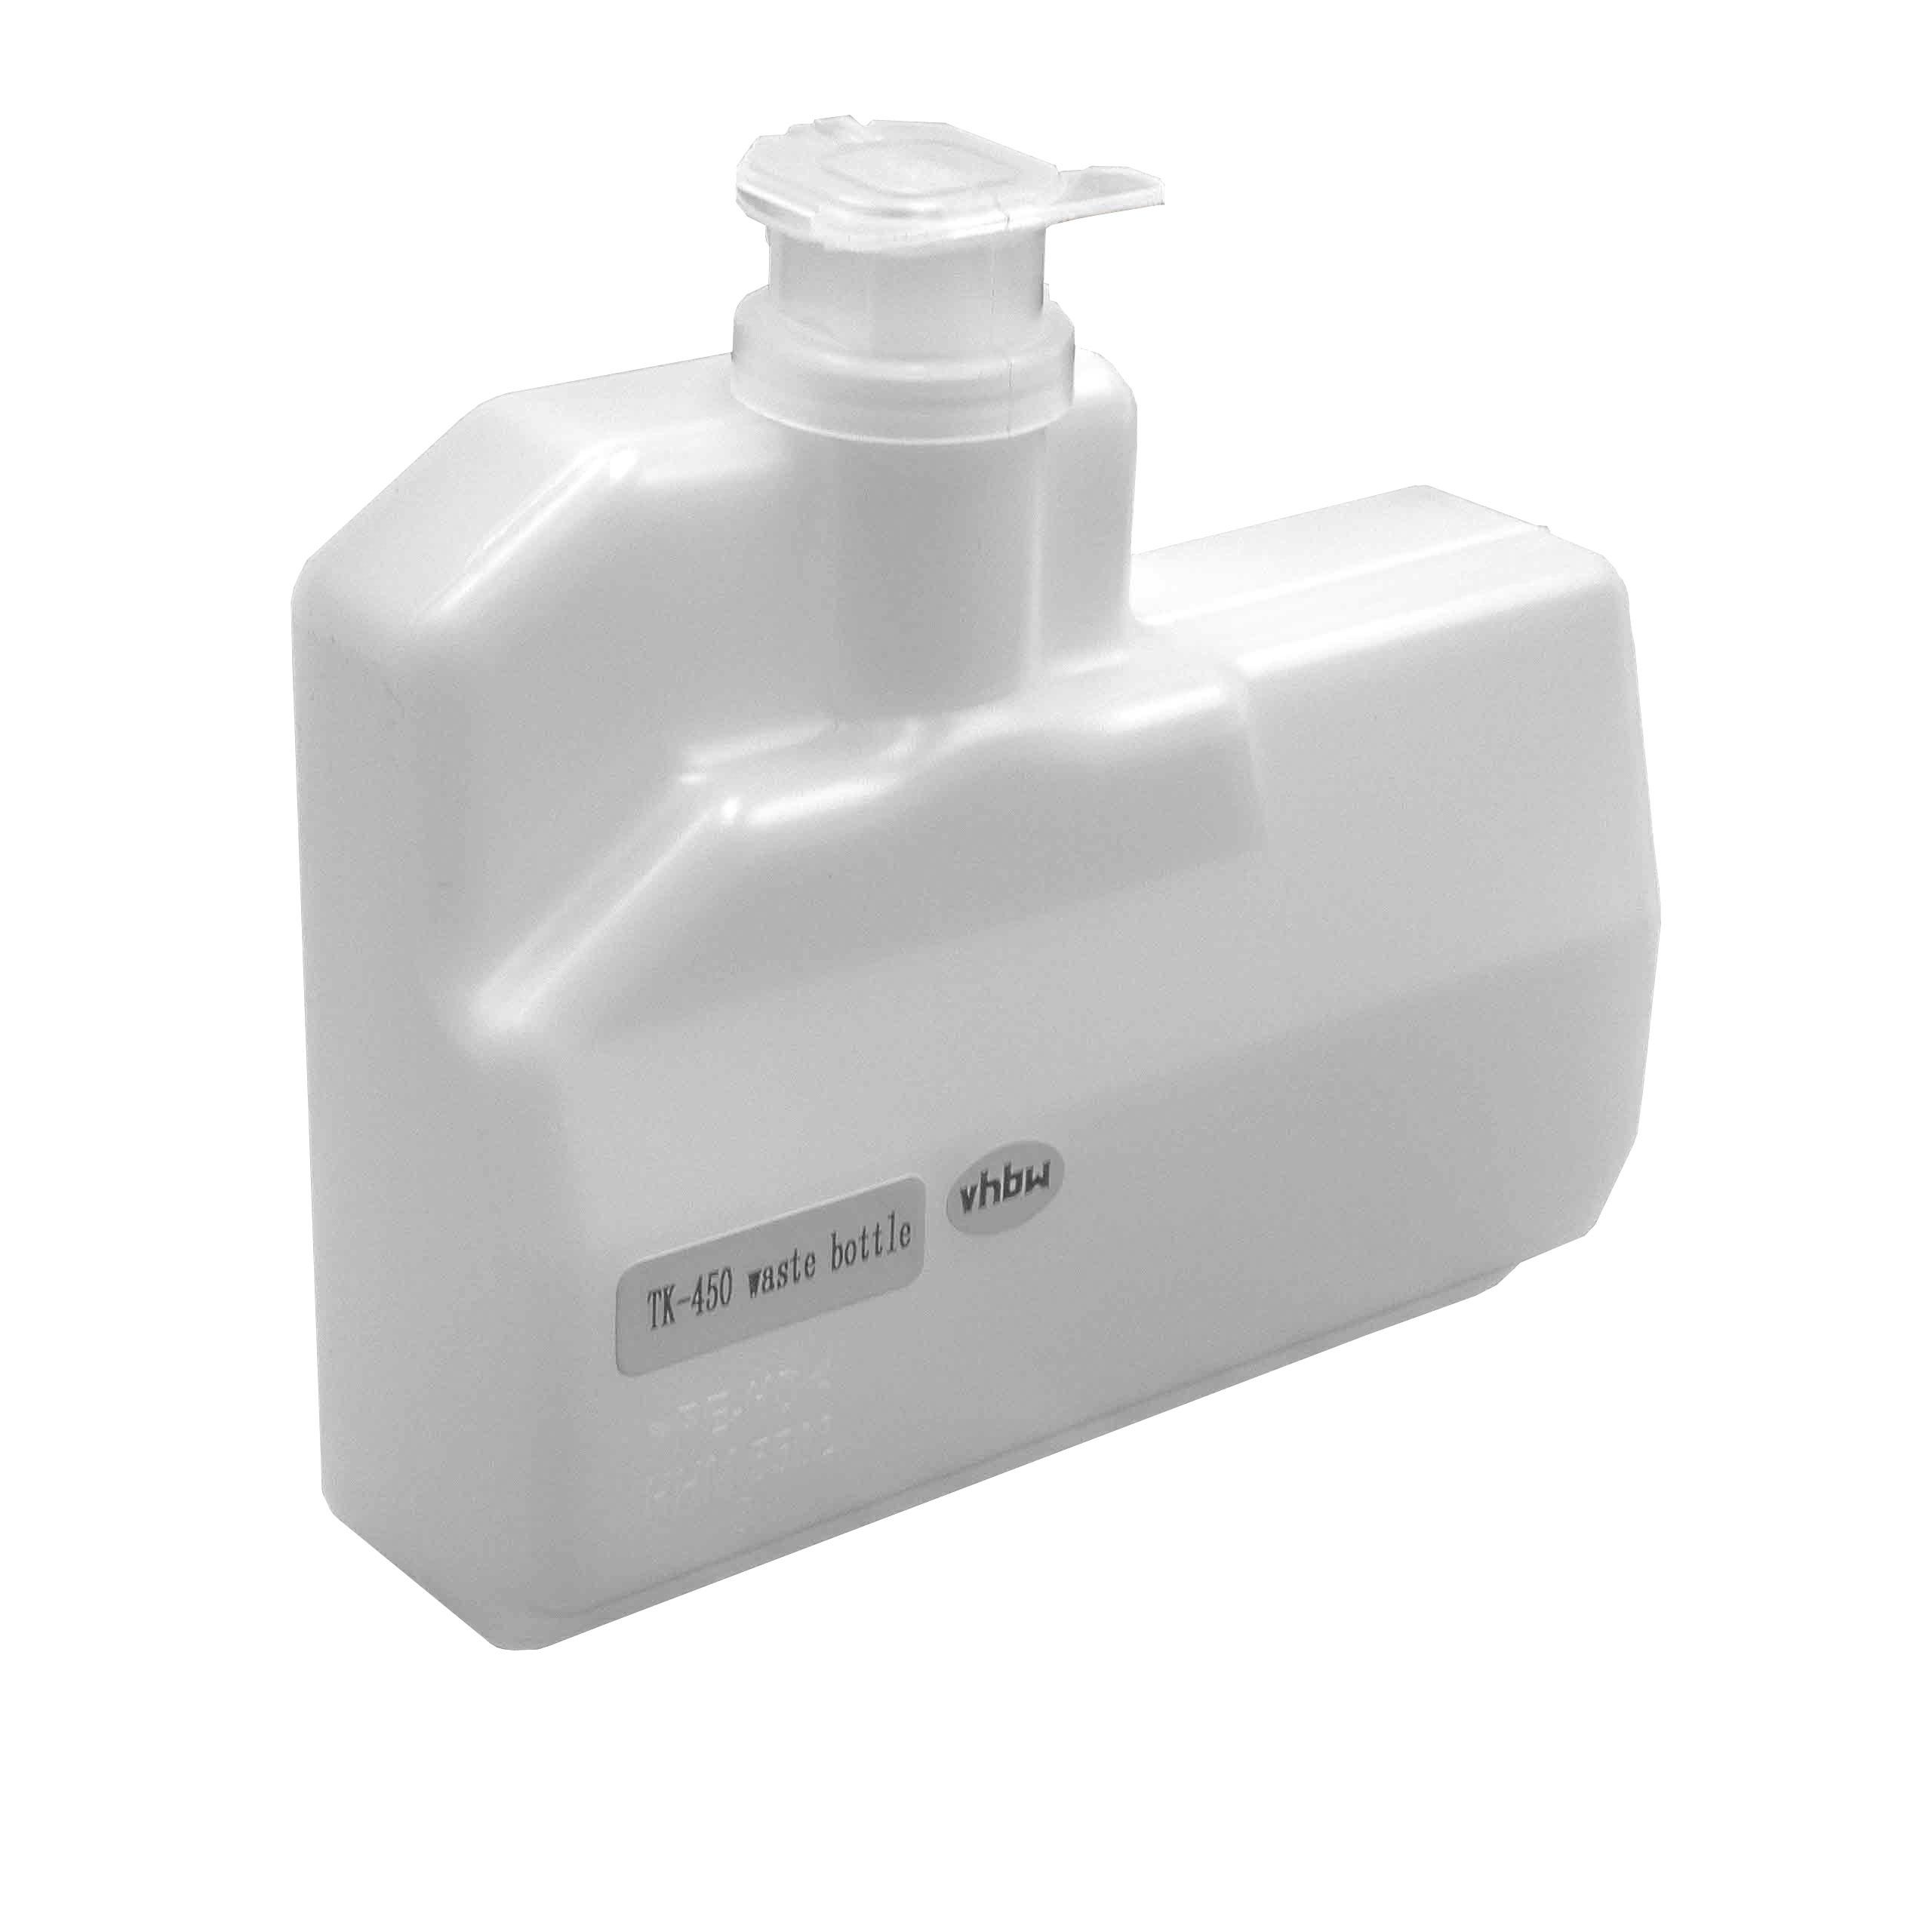 Waste Toner Container for Kyocera FS-6950 DN laser printer - White